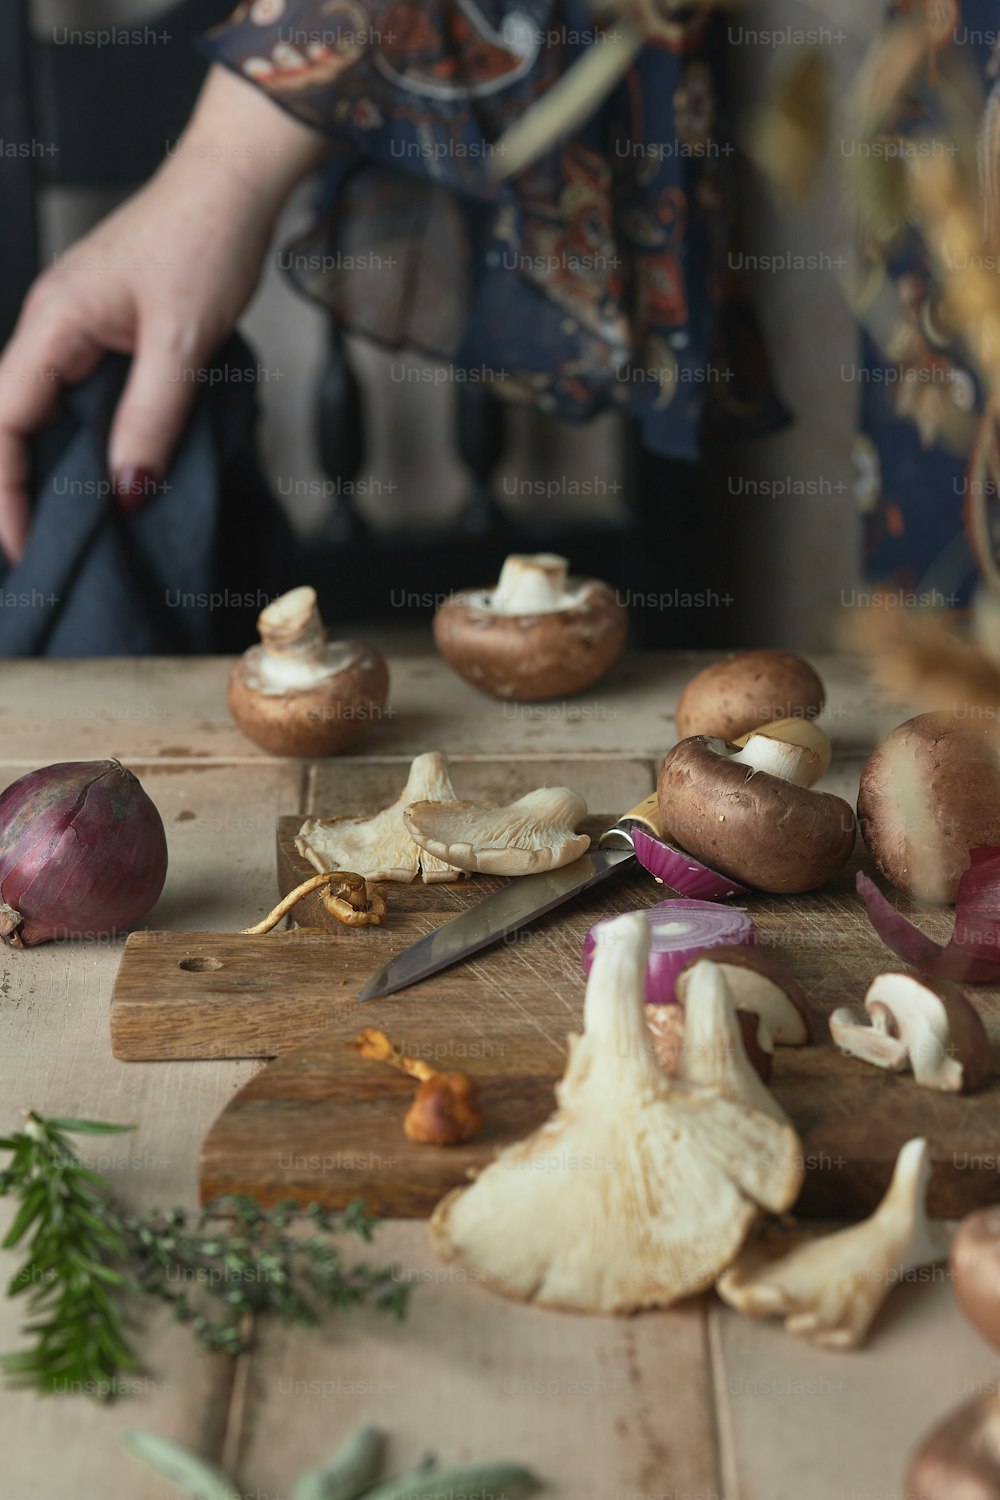 a person chopping mushrooms on a cutting board